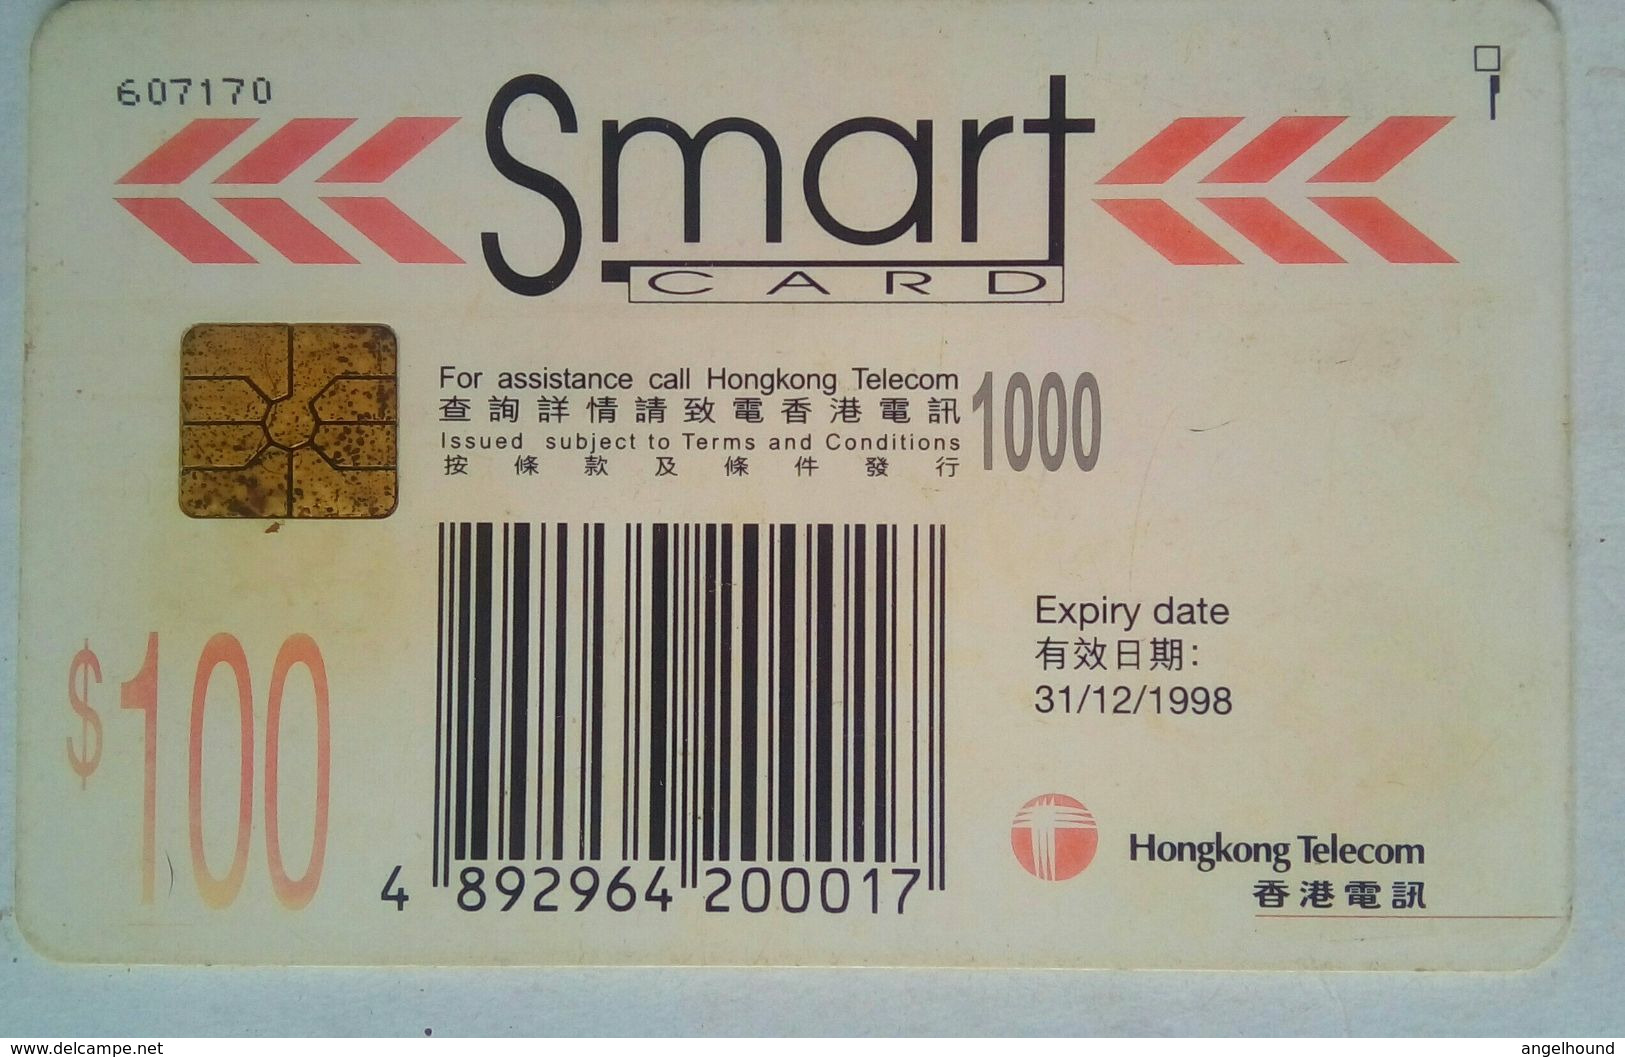 $100 Smart Chip Card - Hong Kong